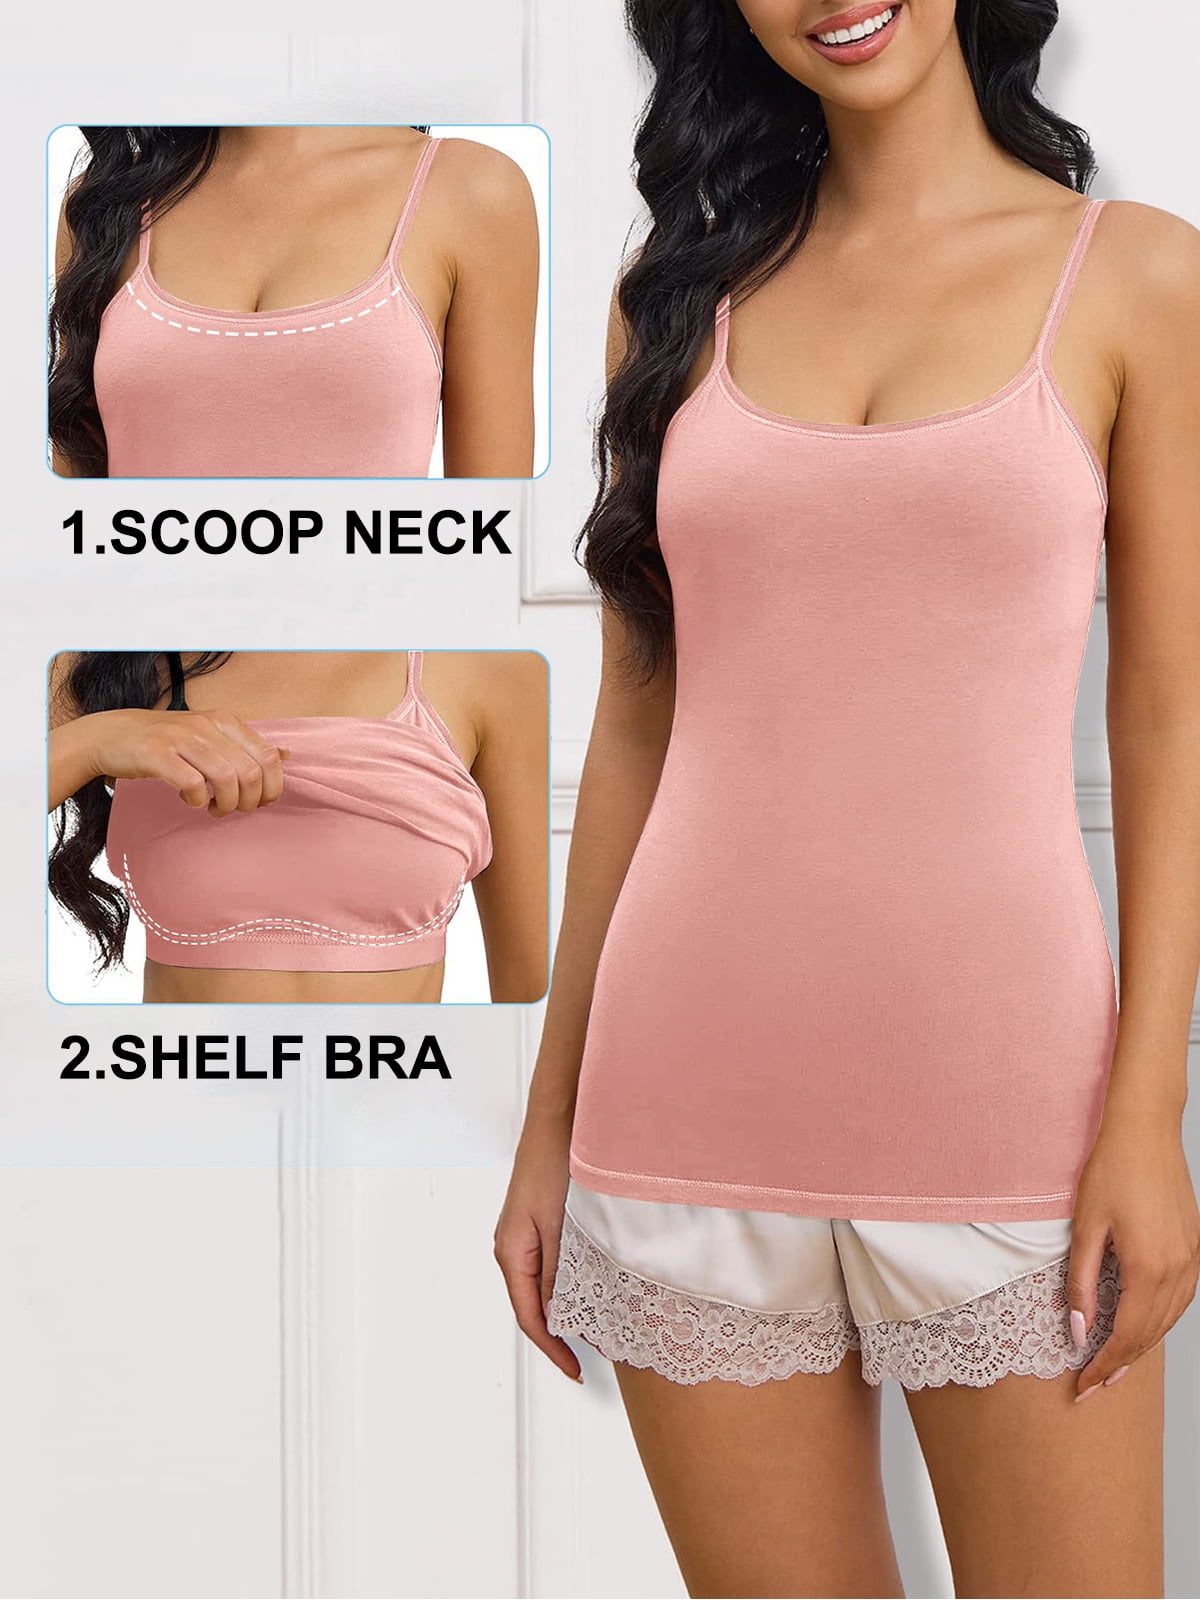 xkwyshop Womens Camisole with Shelf Bra Cotton Undershirts Adjustable Strap  Cami Spaghetti Strap Tank Tops Pink L 